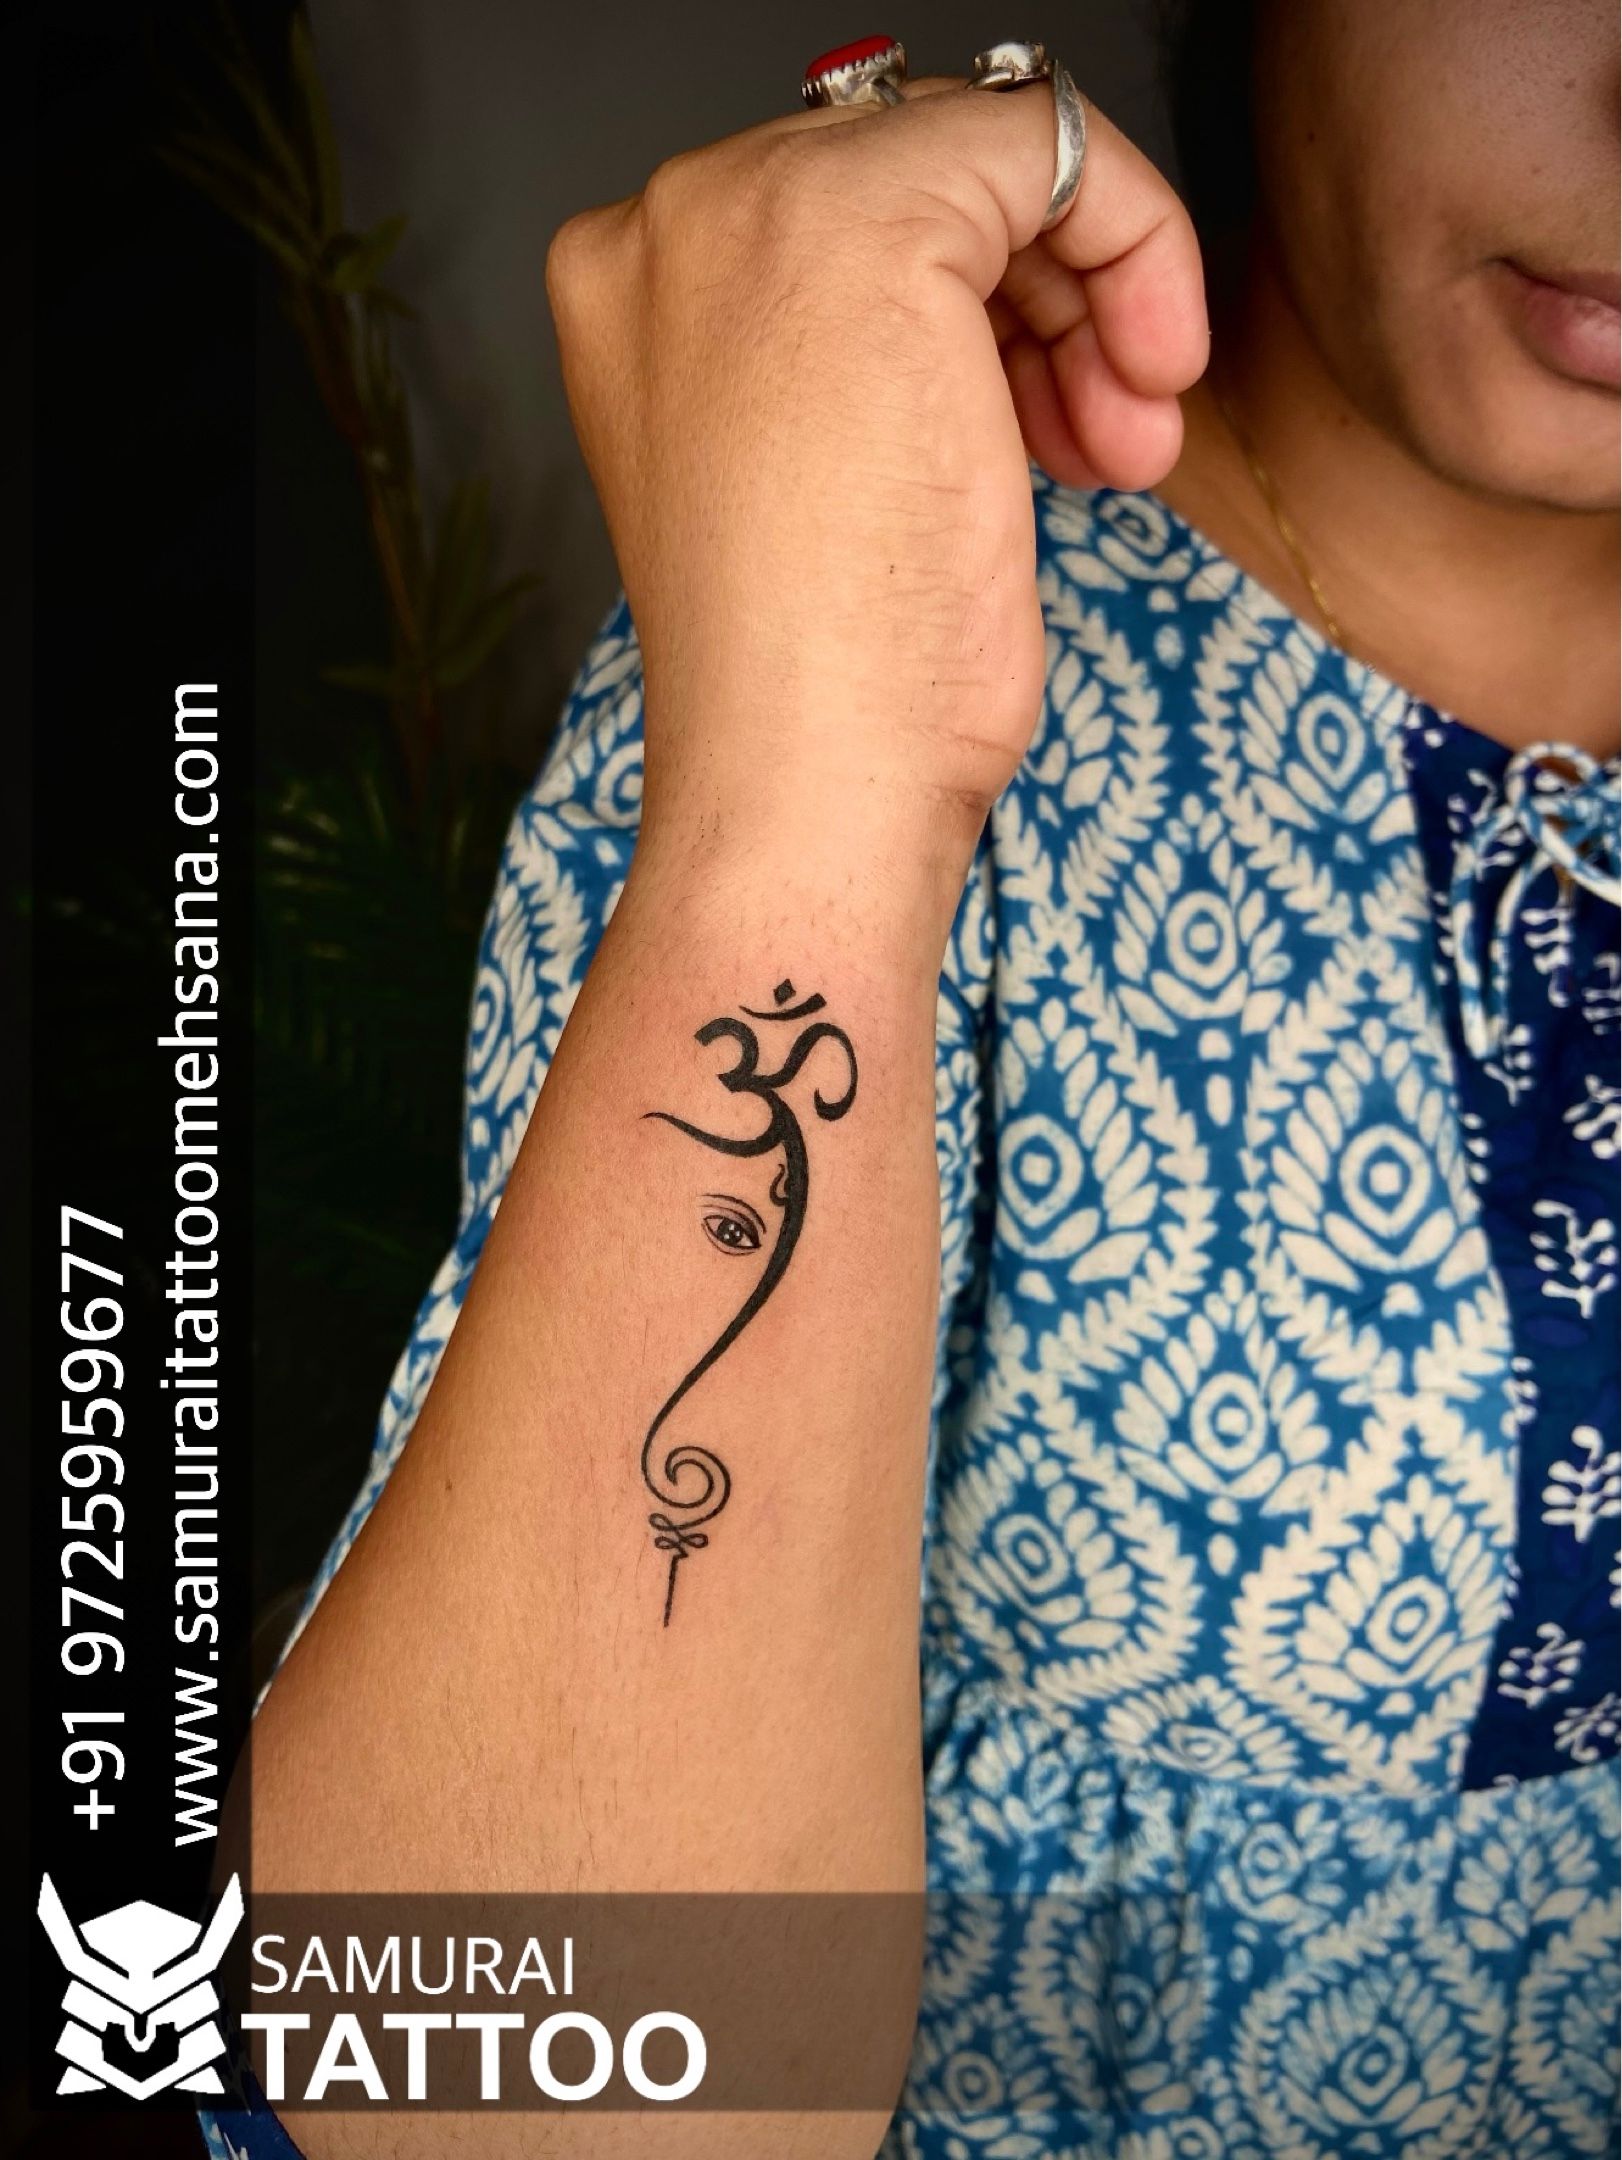 om symbol tattoo designs